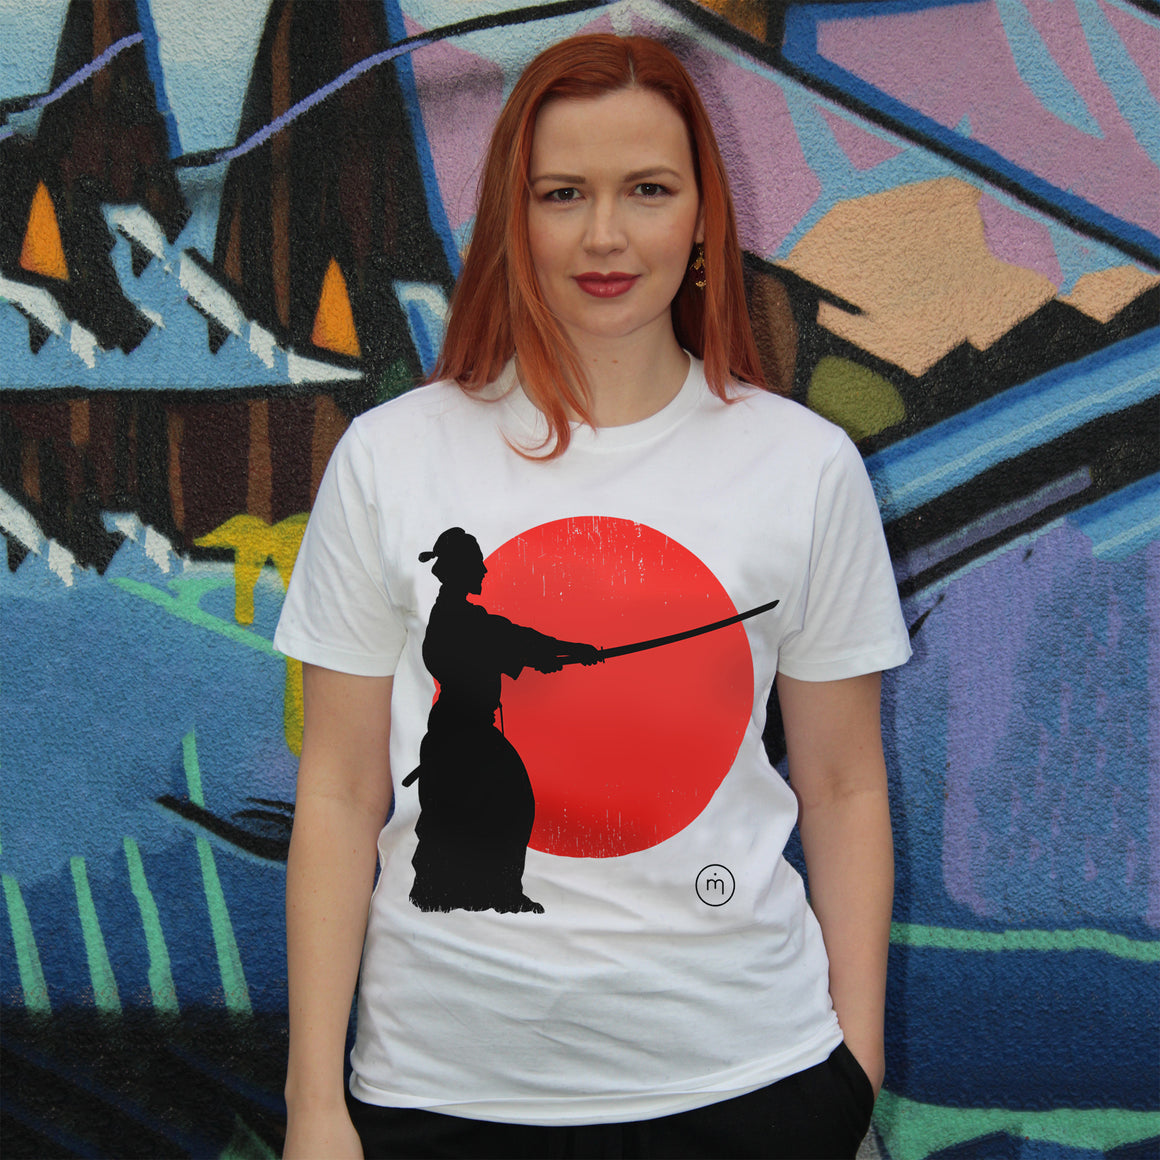 Mero Retro Samurai Sunset Fairtrade organic cotton T-shirt design - samurai silhouette against fiery sunset